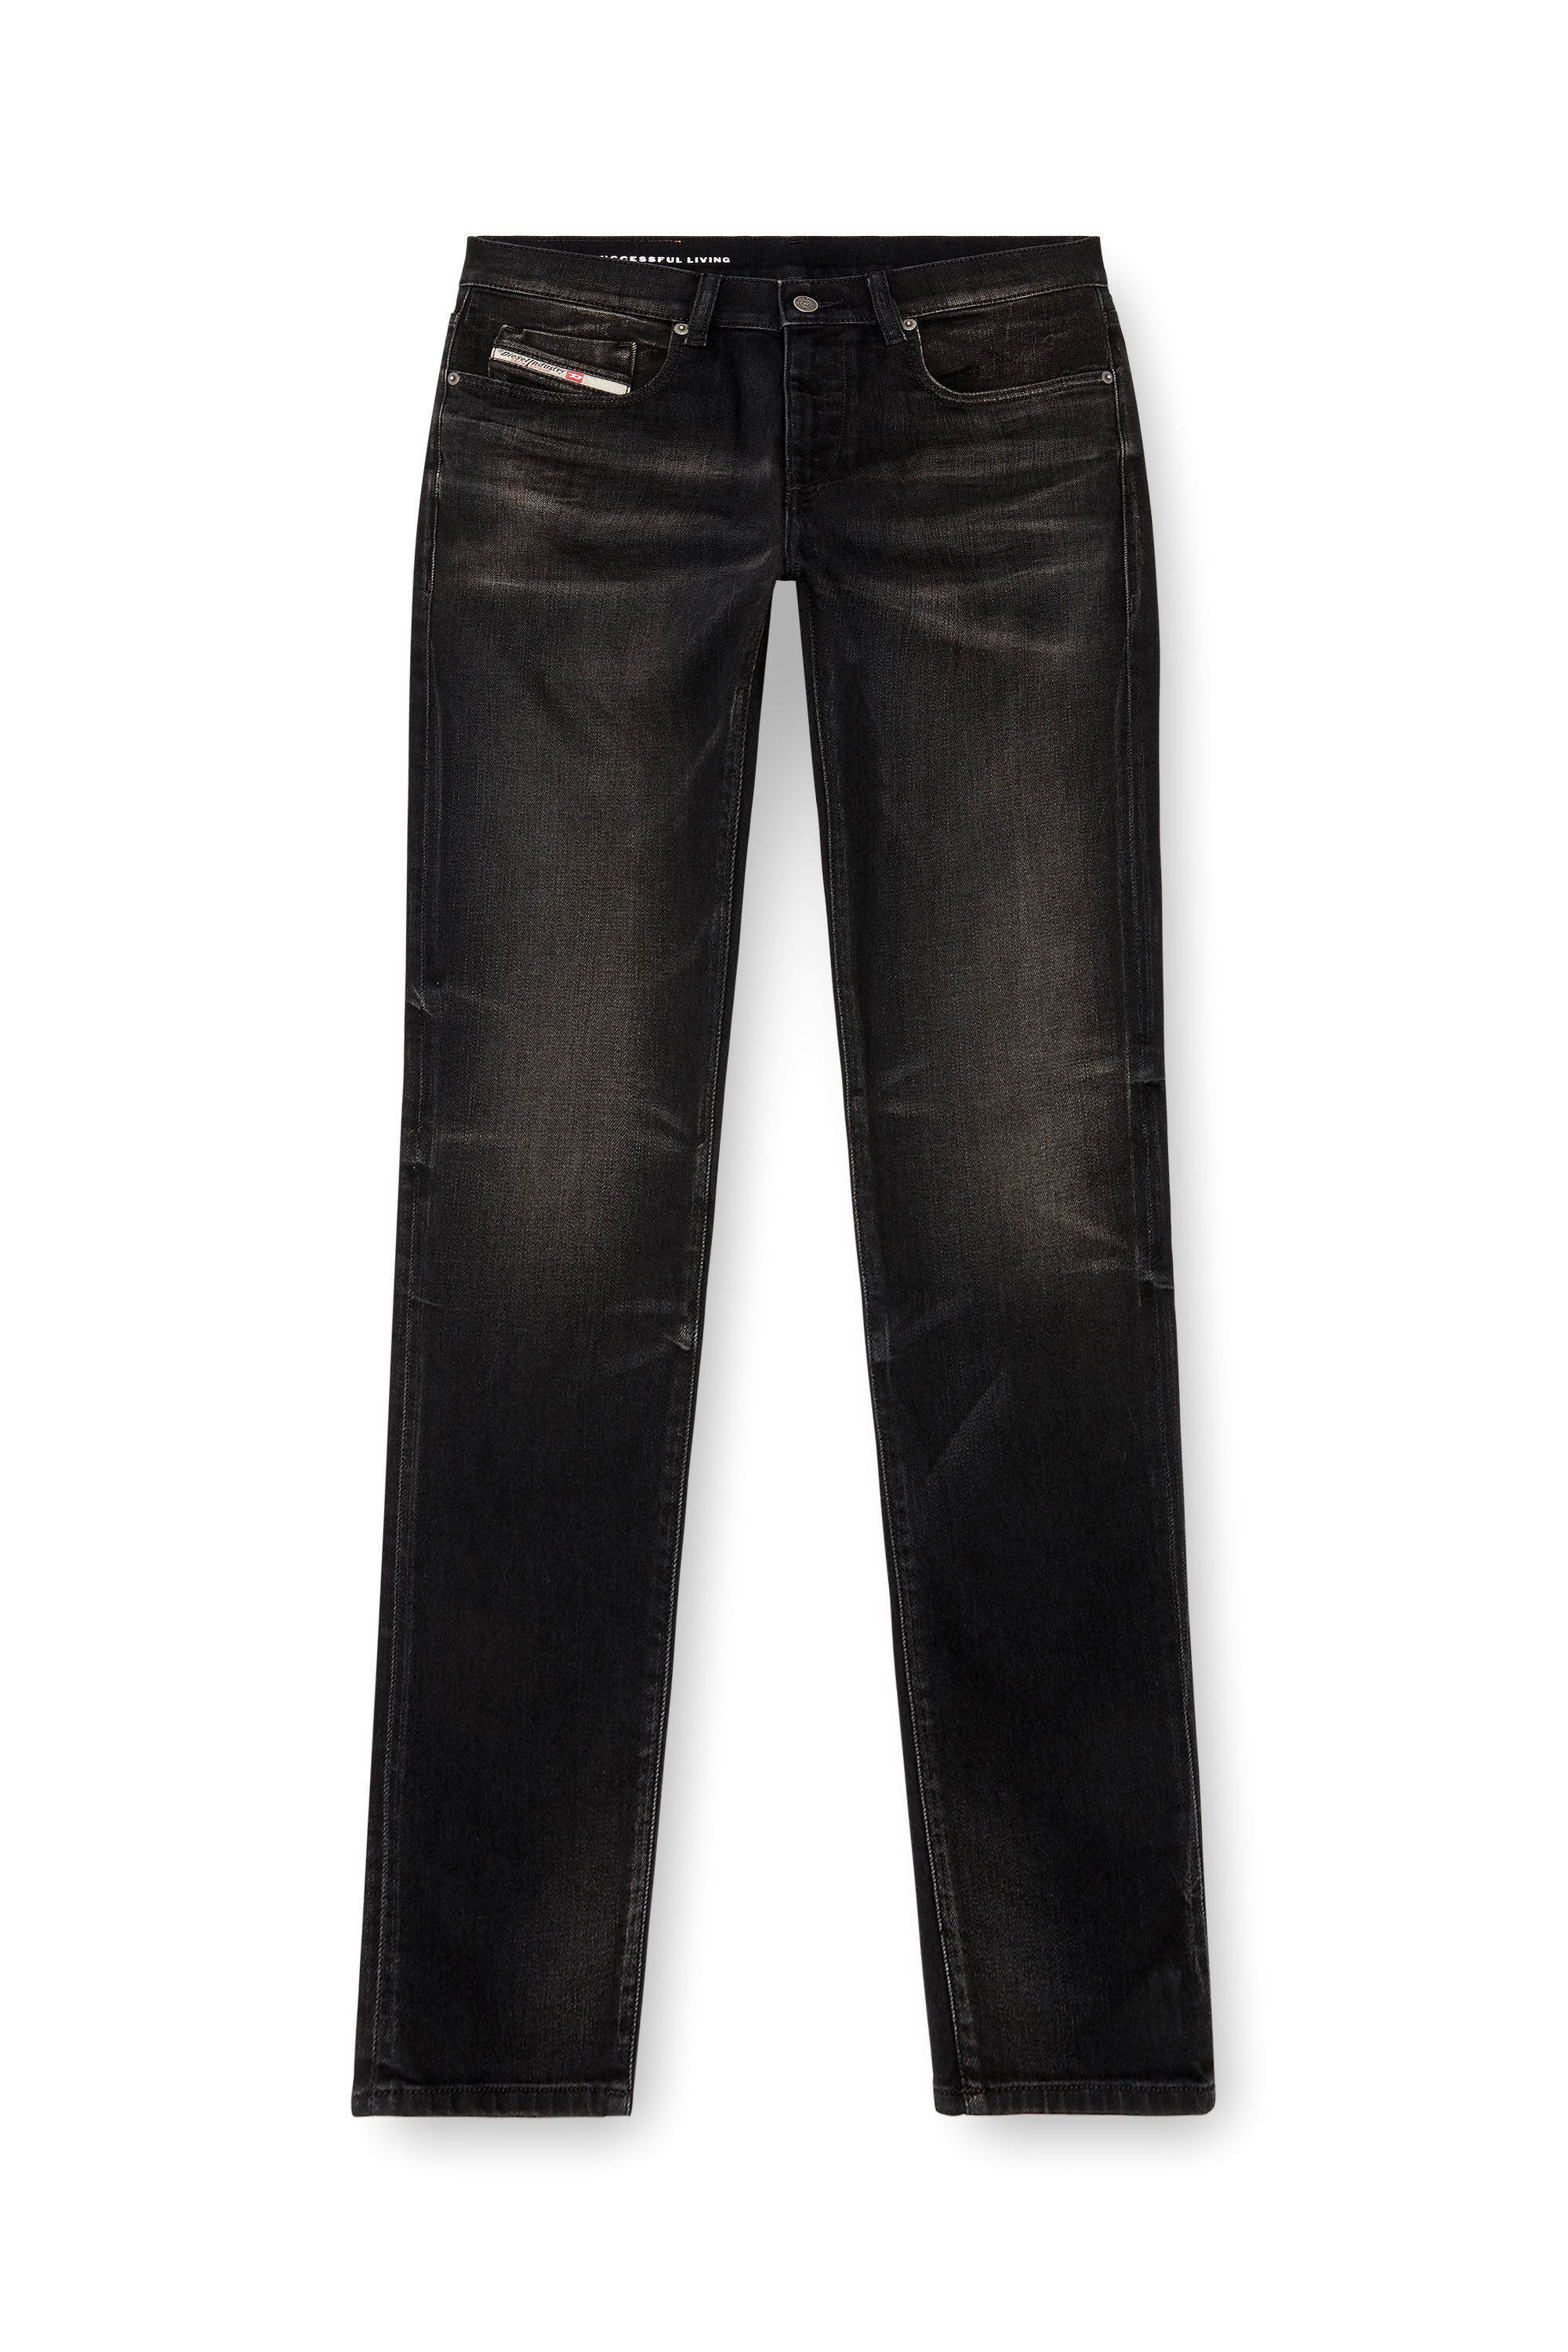 Diesel - Slim Jeans 2019 D-Strukt 09J53, Hombre Slim Jeans - 2019 D-Strukt in Negro - Image 2